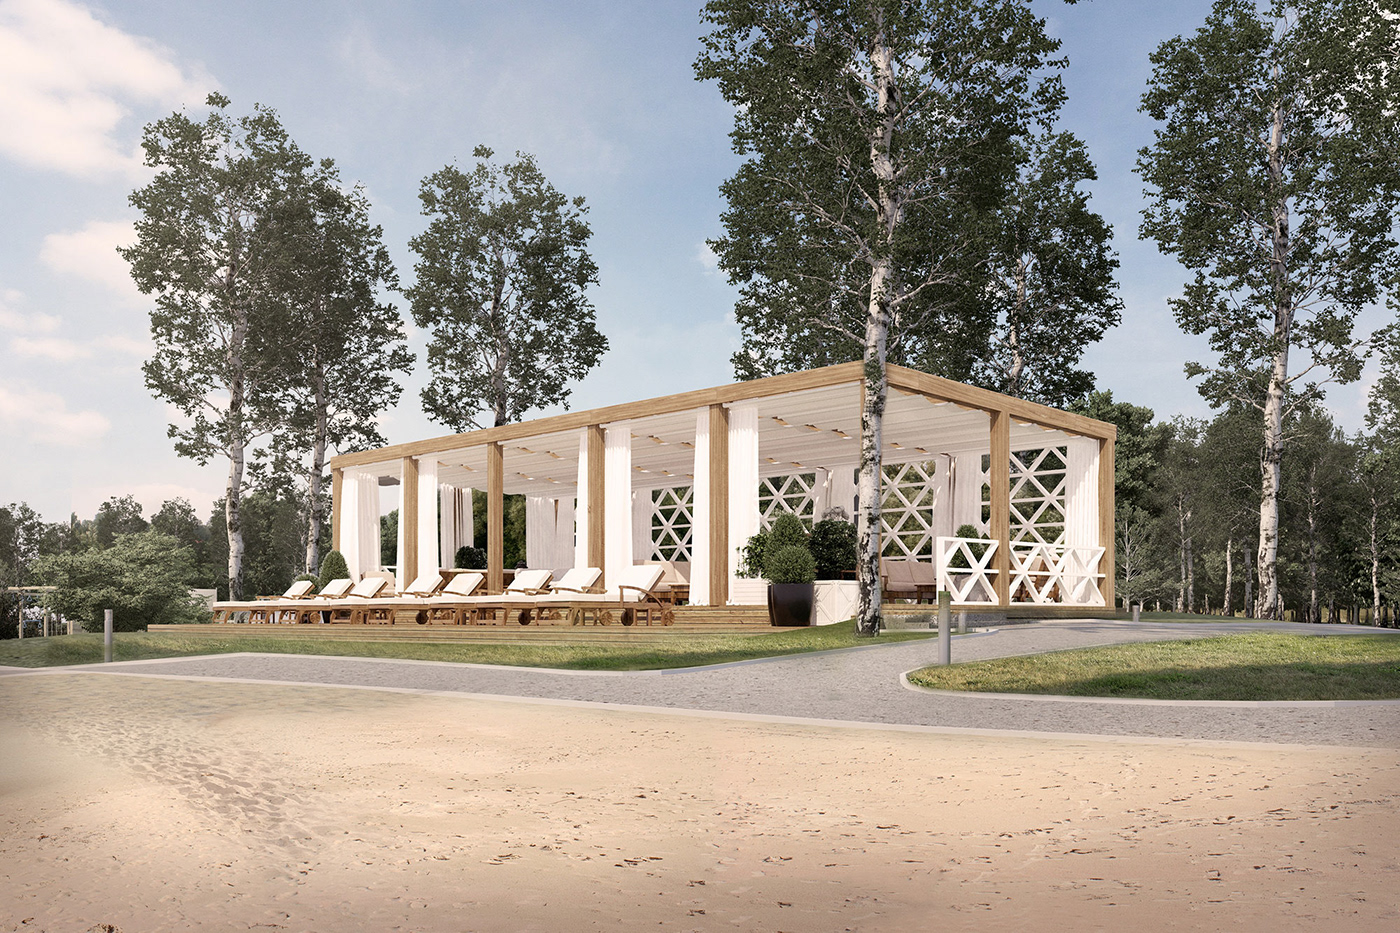 3D architecture beach exterior exterior design Exterior rendering Landscape Render resort пляж